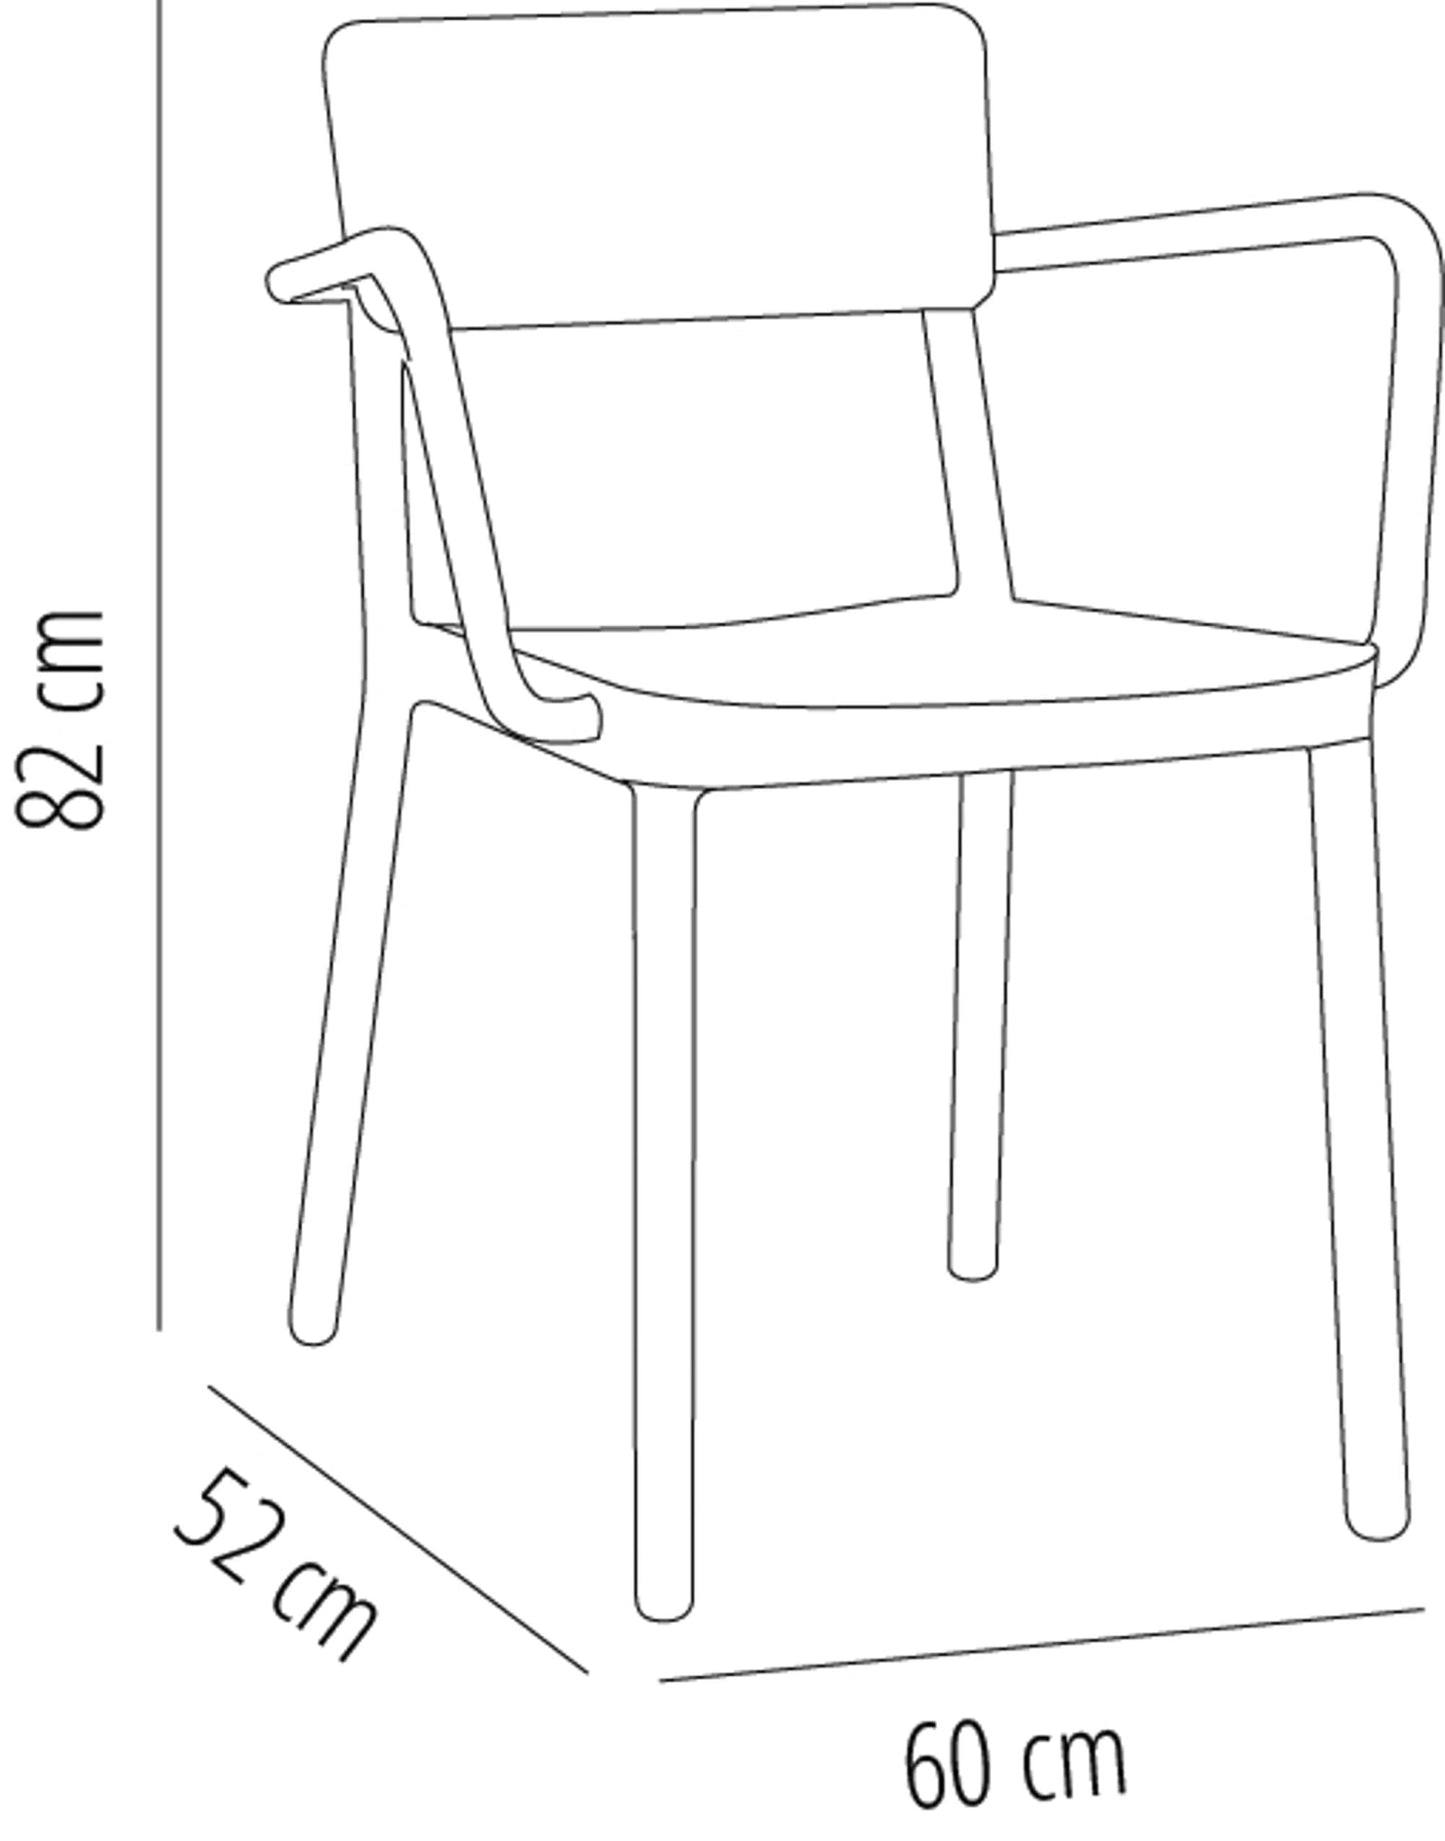 Resol lisboa set 2 silla con brazos interior, exterior negro